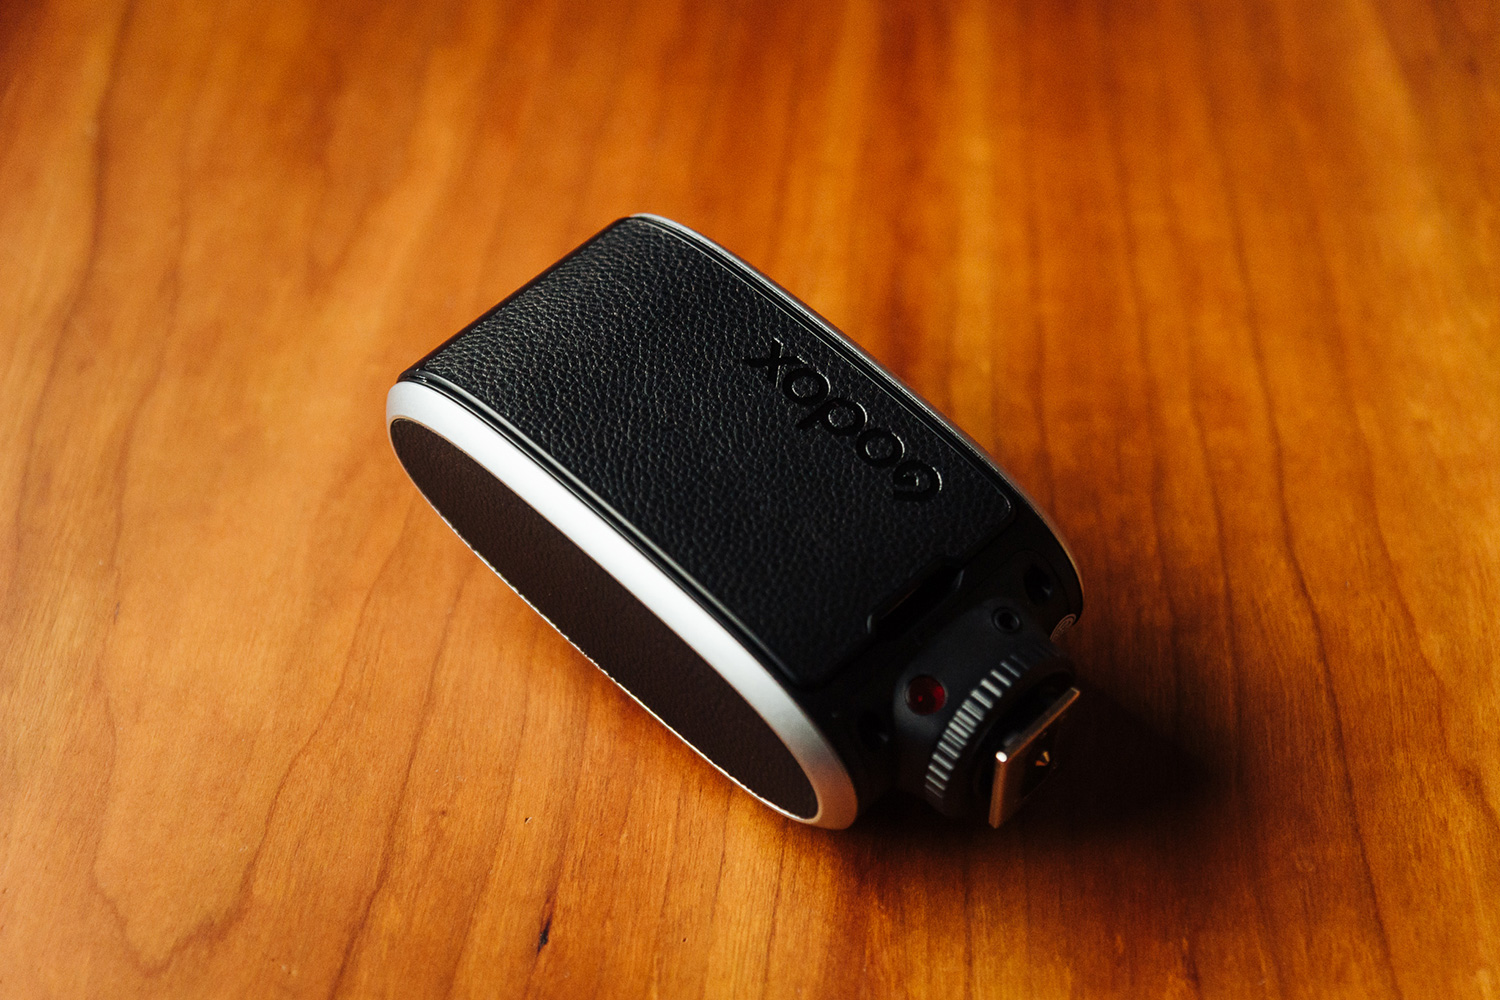 The new Godox retro camera flashes - Olympus Passion